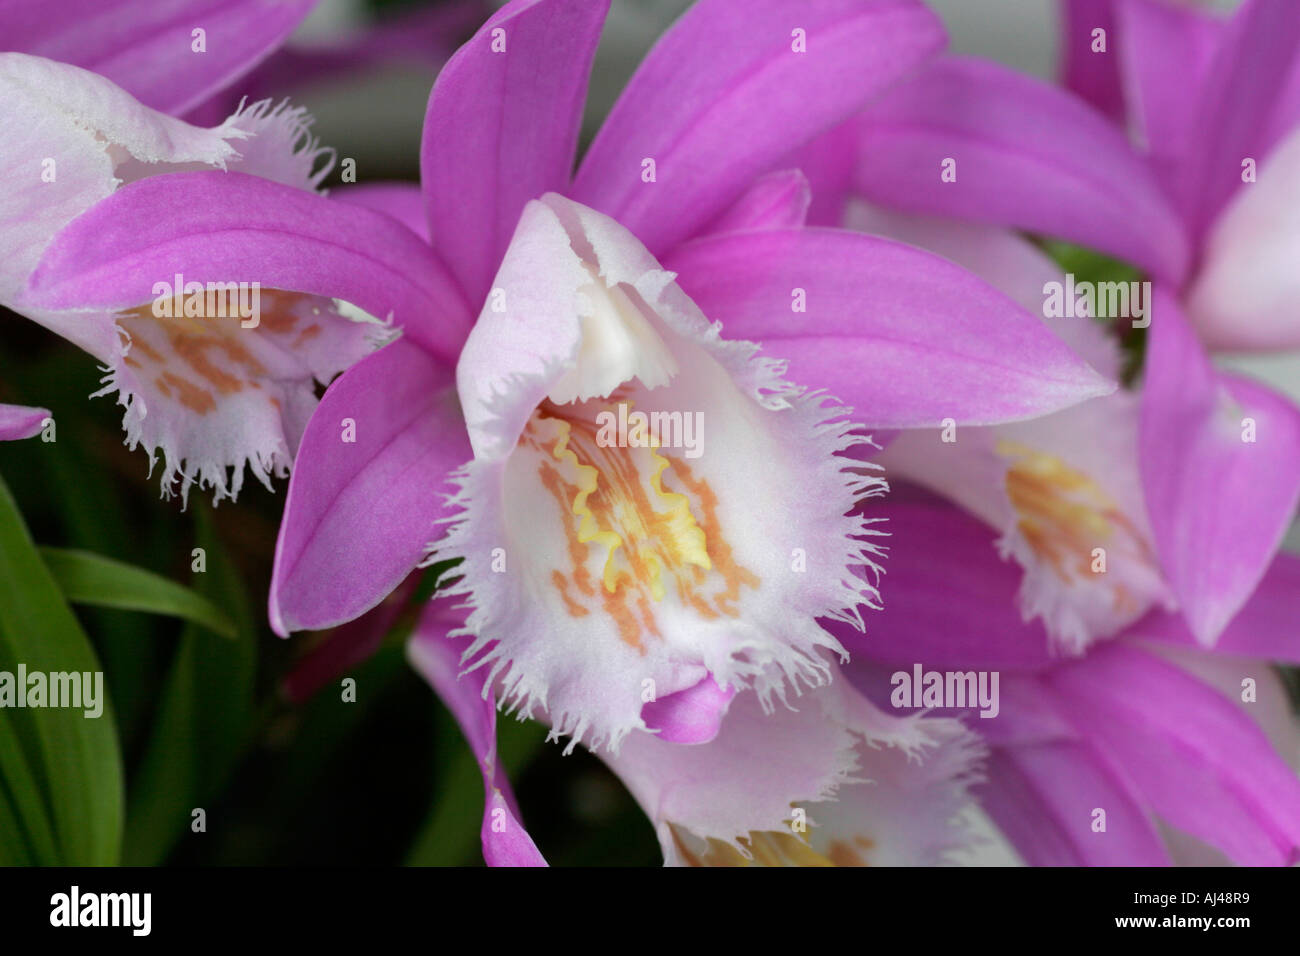 Pleione formosana orchid flowers close up Stock Photo